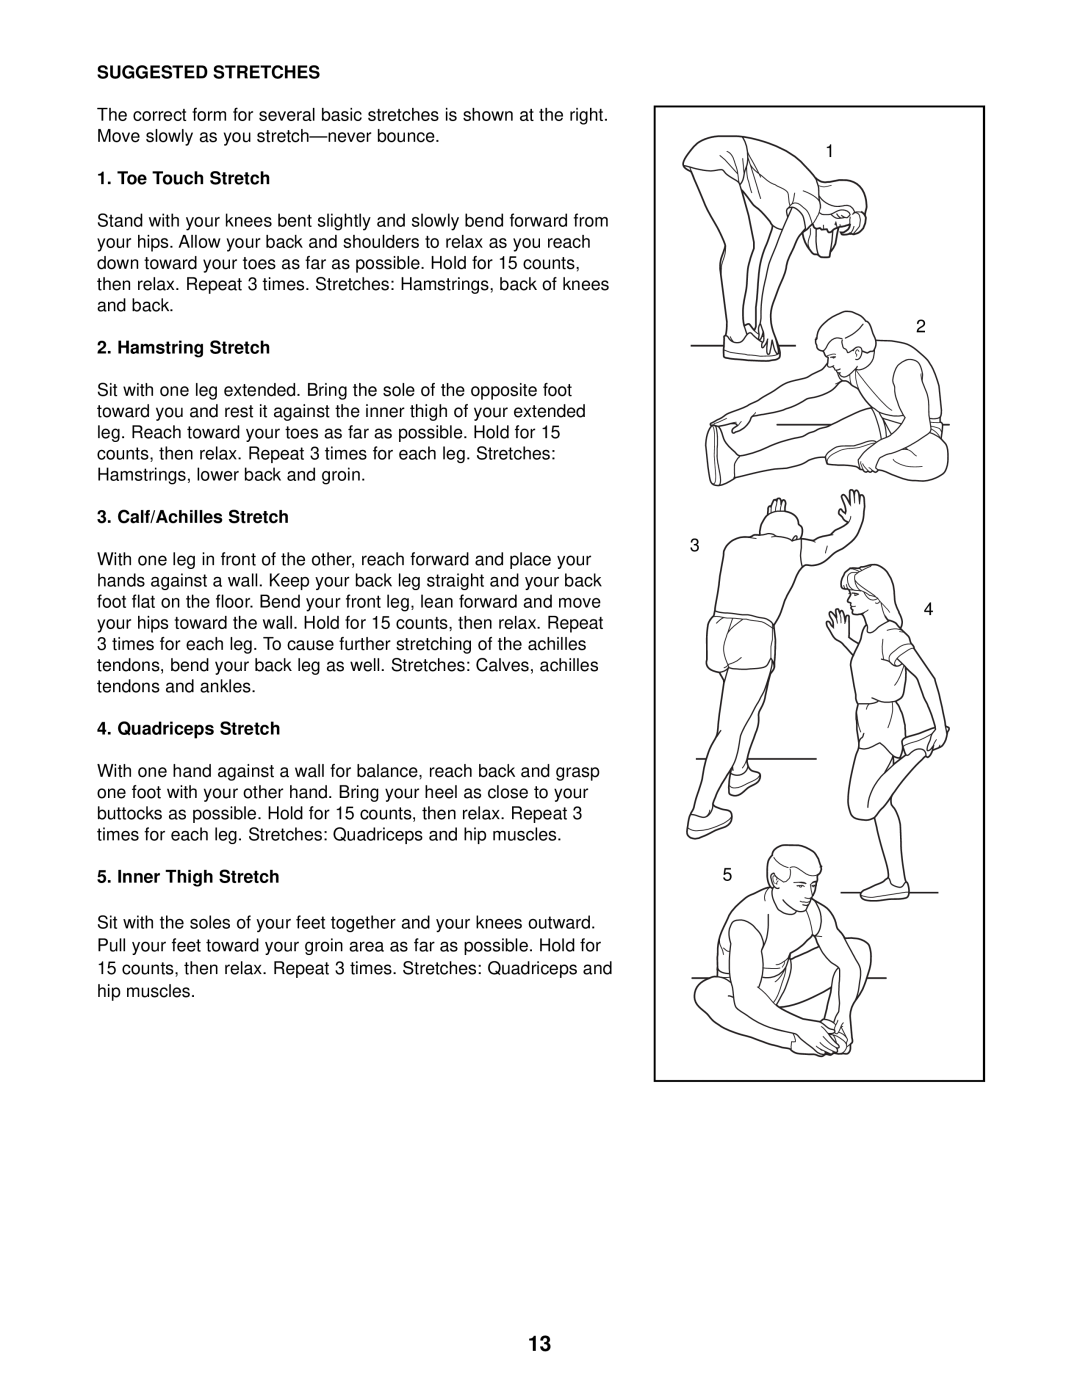 ProForm PFEL03010 Suggested Stretches, Toe Touch Stretch, Hamstring Stretch, Calf/Achilles Stretch, Quadriceps Stretch 